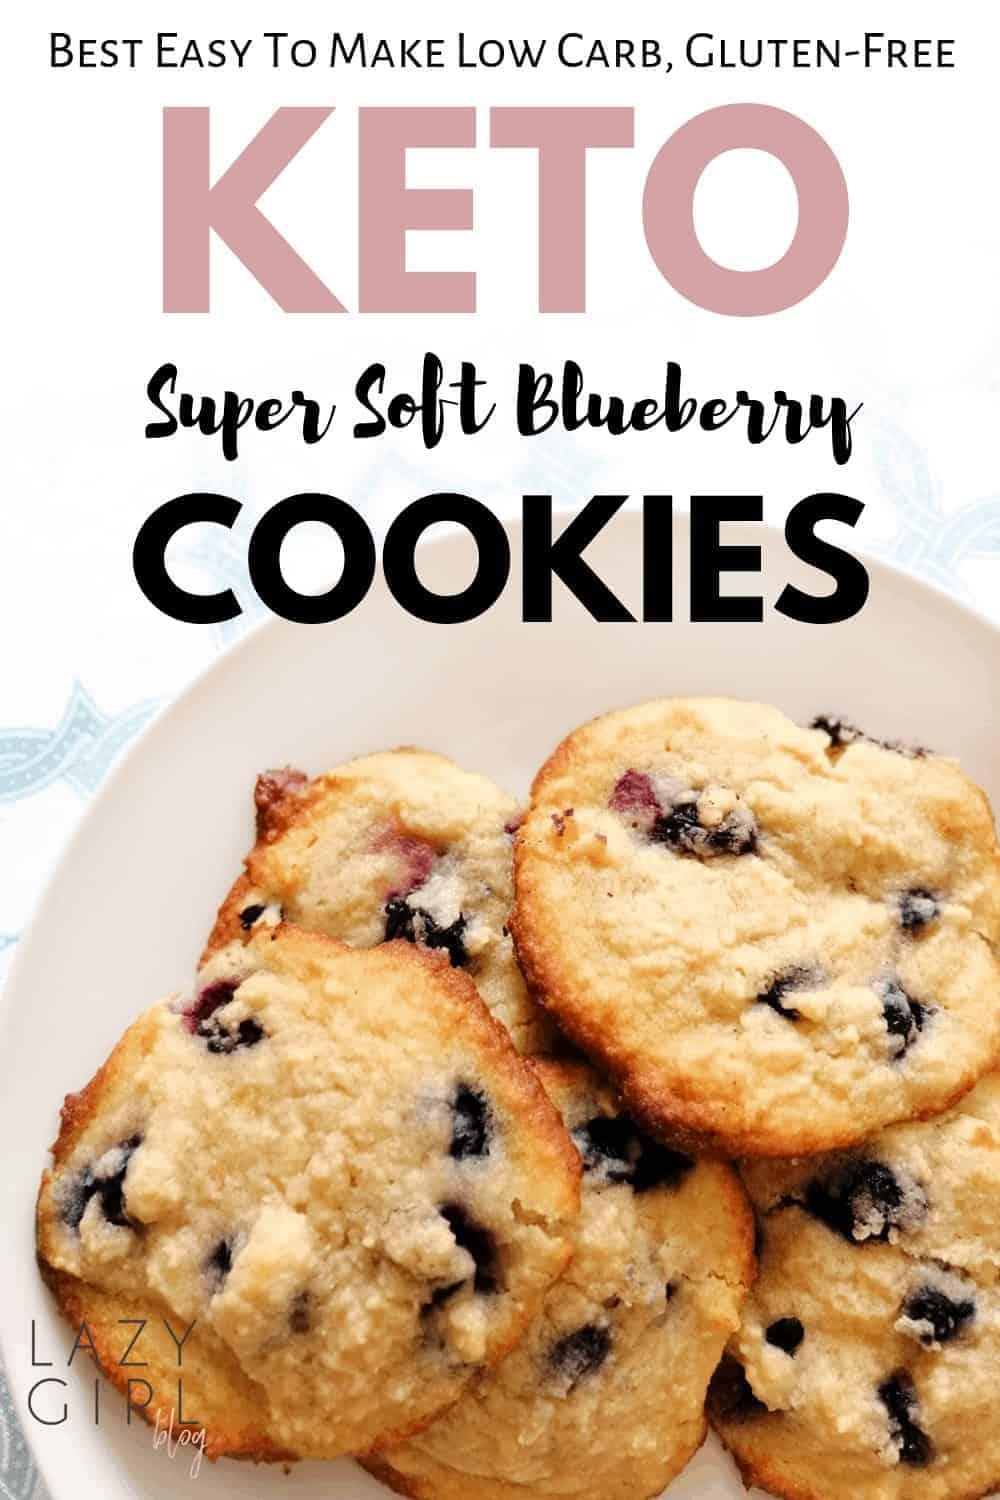 Keto Blueberry Cookies easy